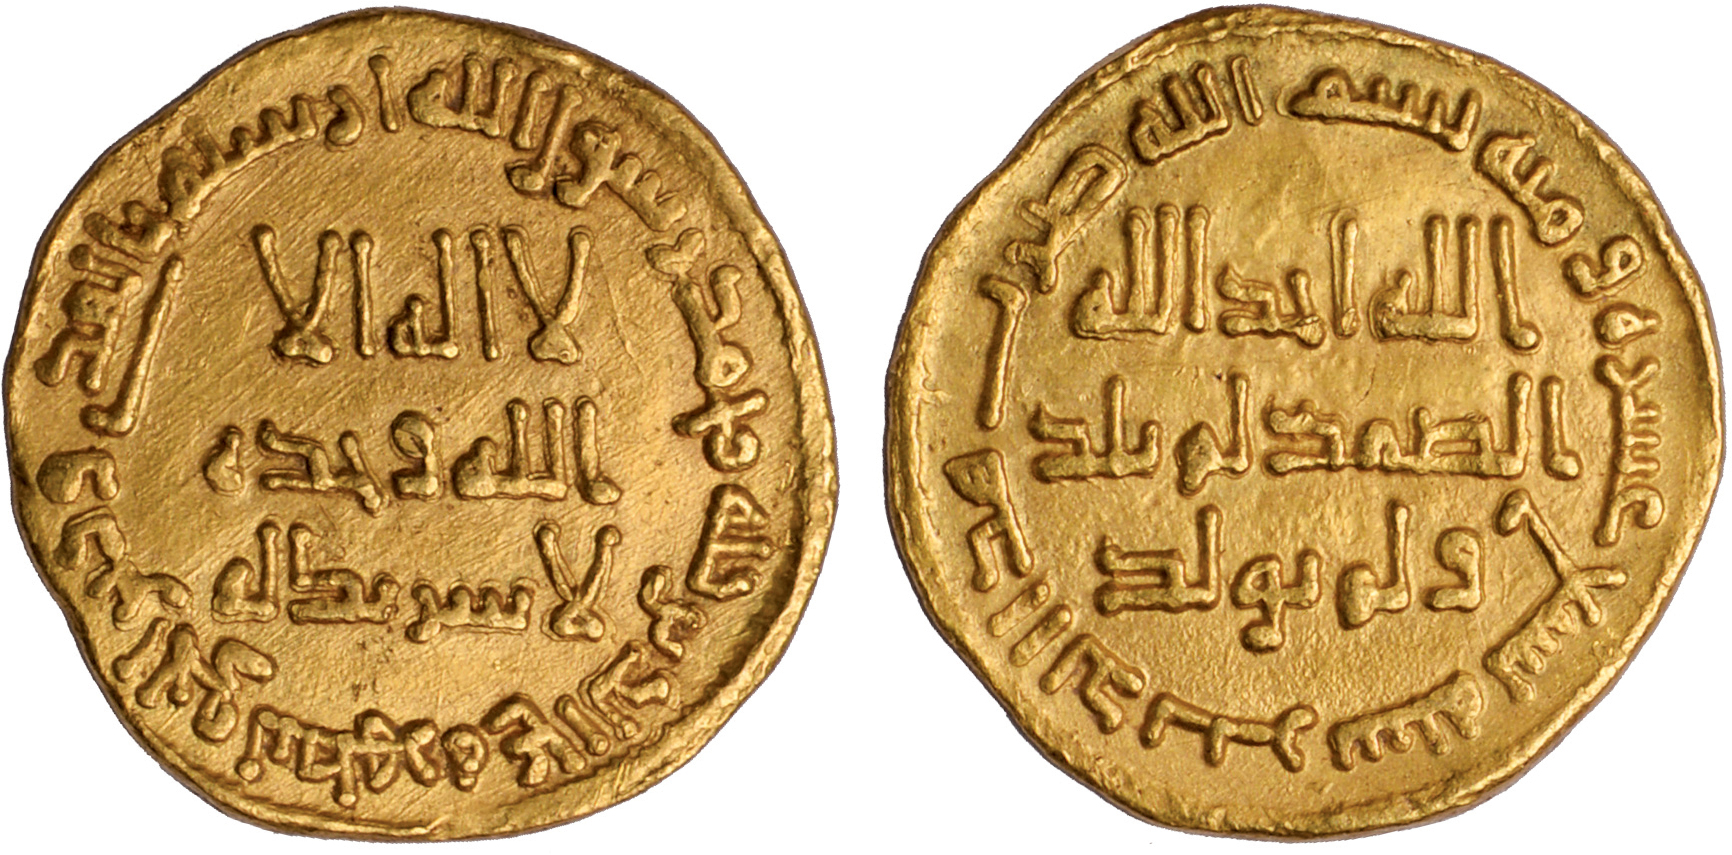 Umayyad, temp. Hisham (105-125h), dinar, no mint 119h, wt. 4.23gms. (Album 136), about extremely